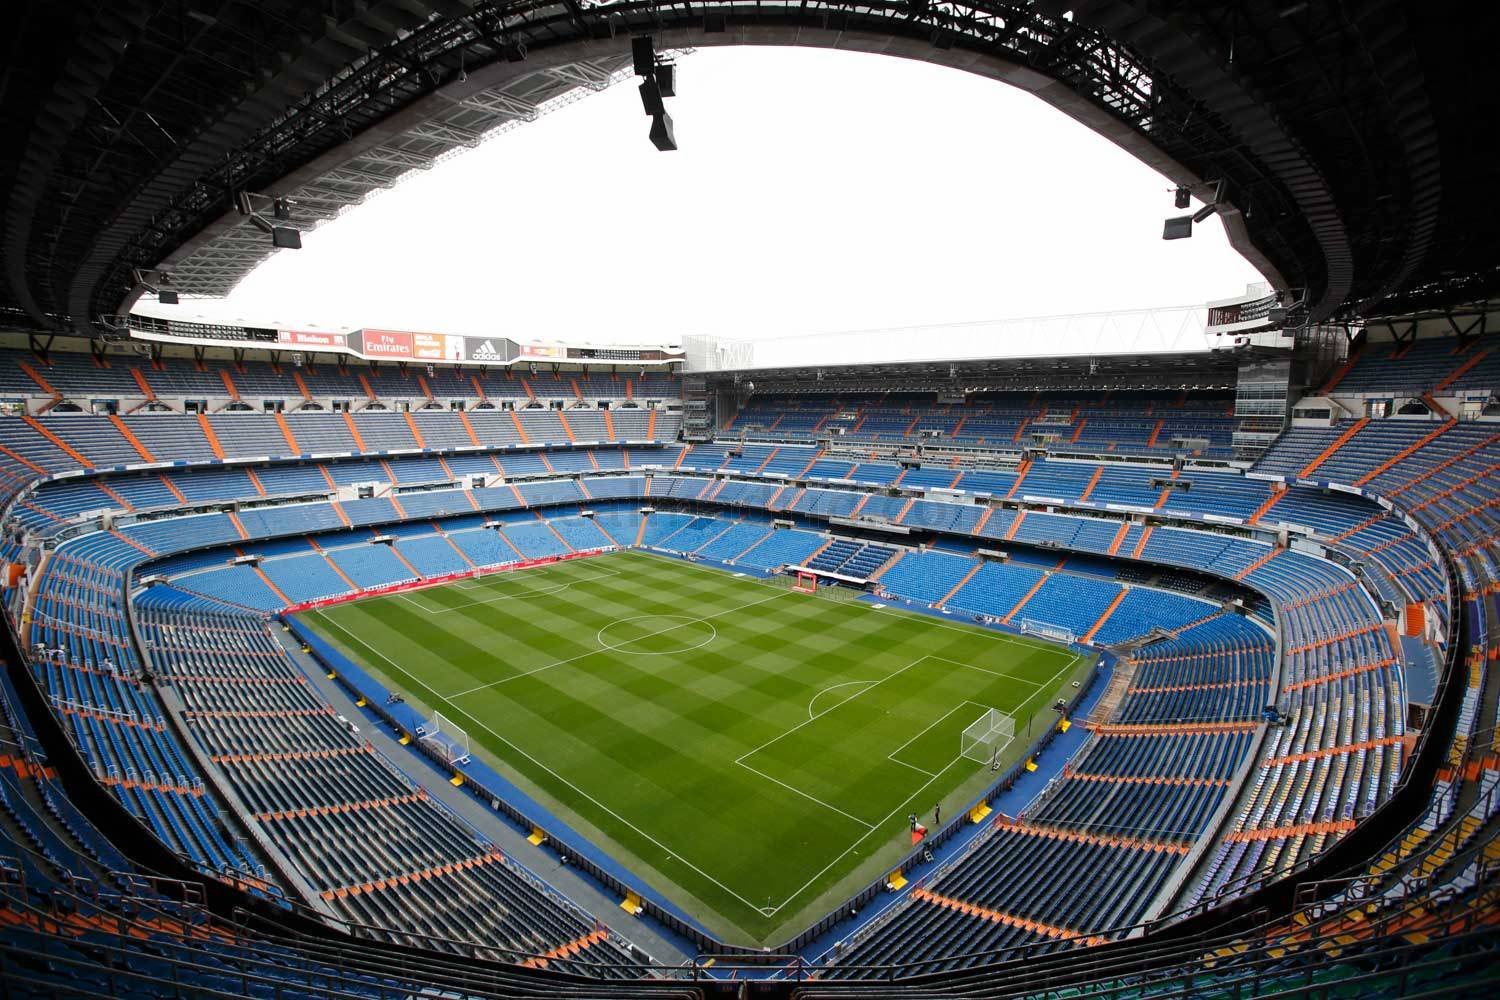 Santiago Bernabéu is the second biggest football stadium in Spain